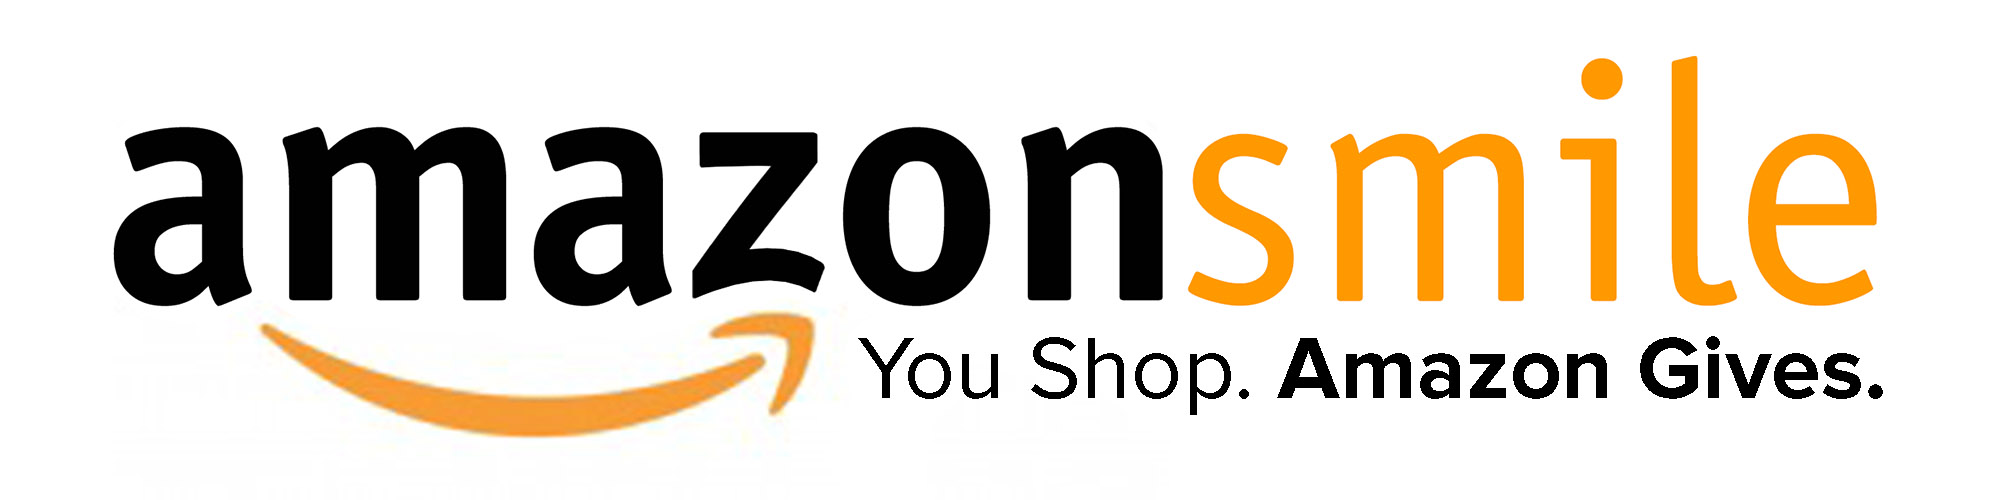 Amazon Smile / you shop Amazon gives